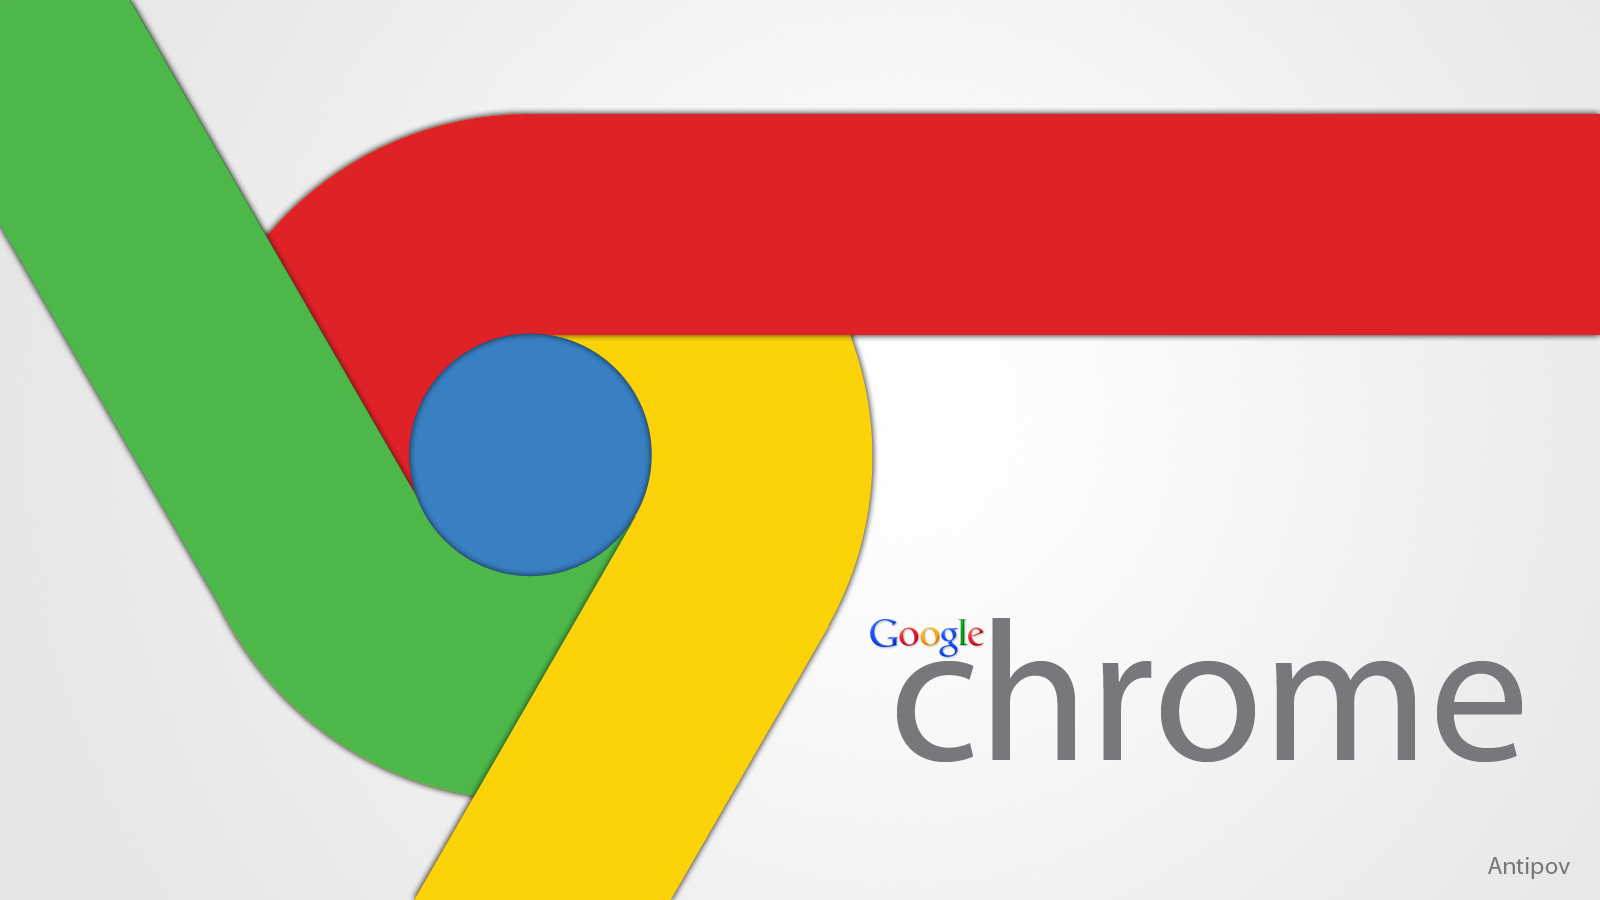 S For Google Chrome